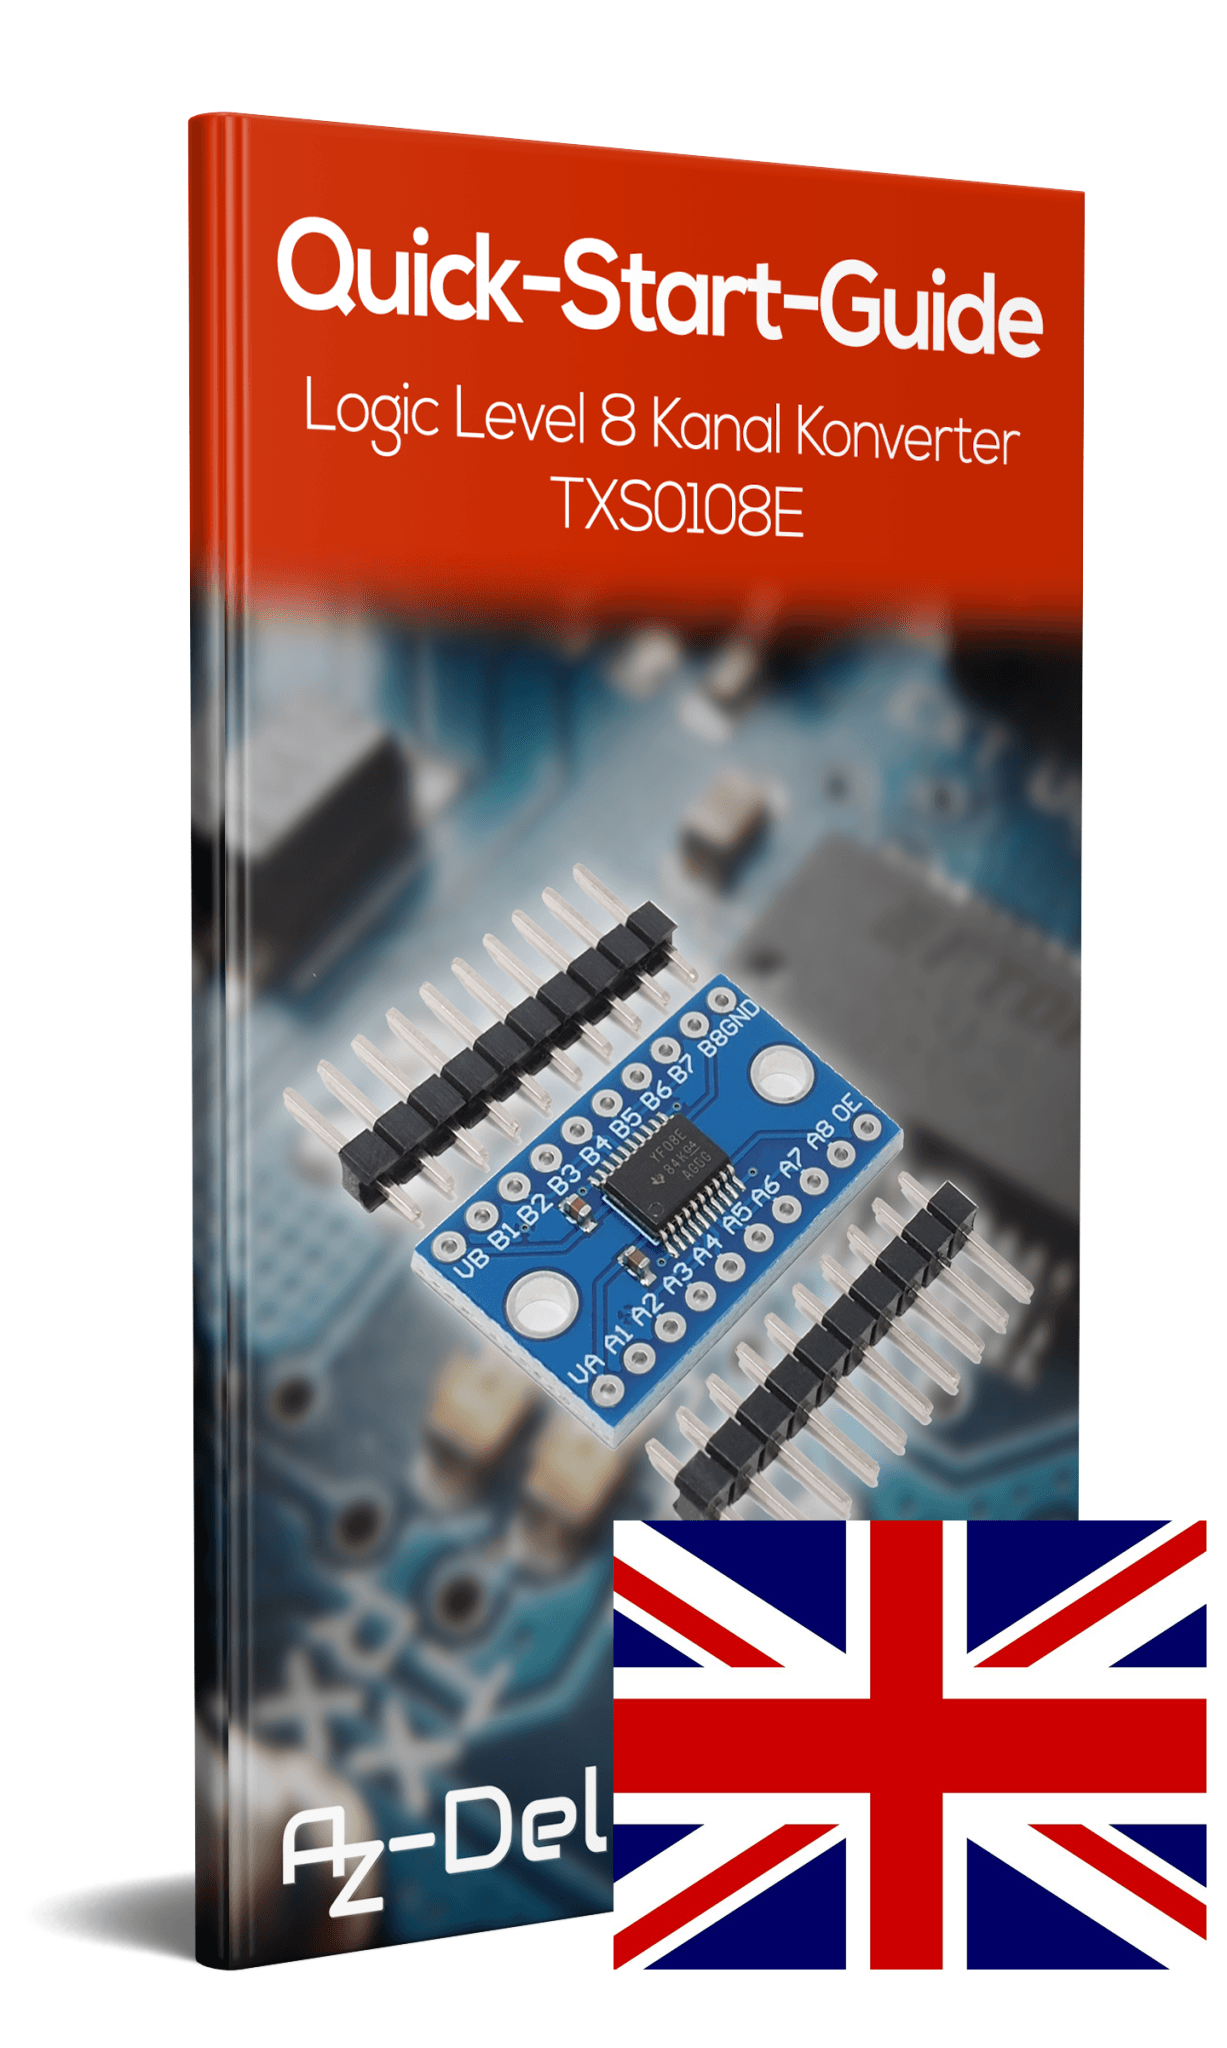 Logic Level Converter TXS0108E 8 Kanal für Arduino und Raspberry Pi - AZ-Delivery